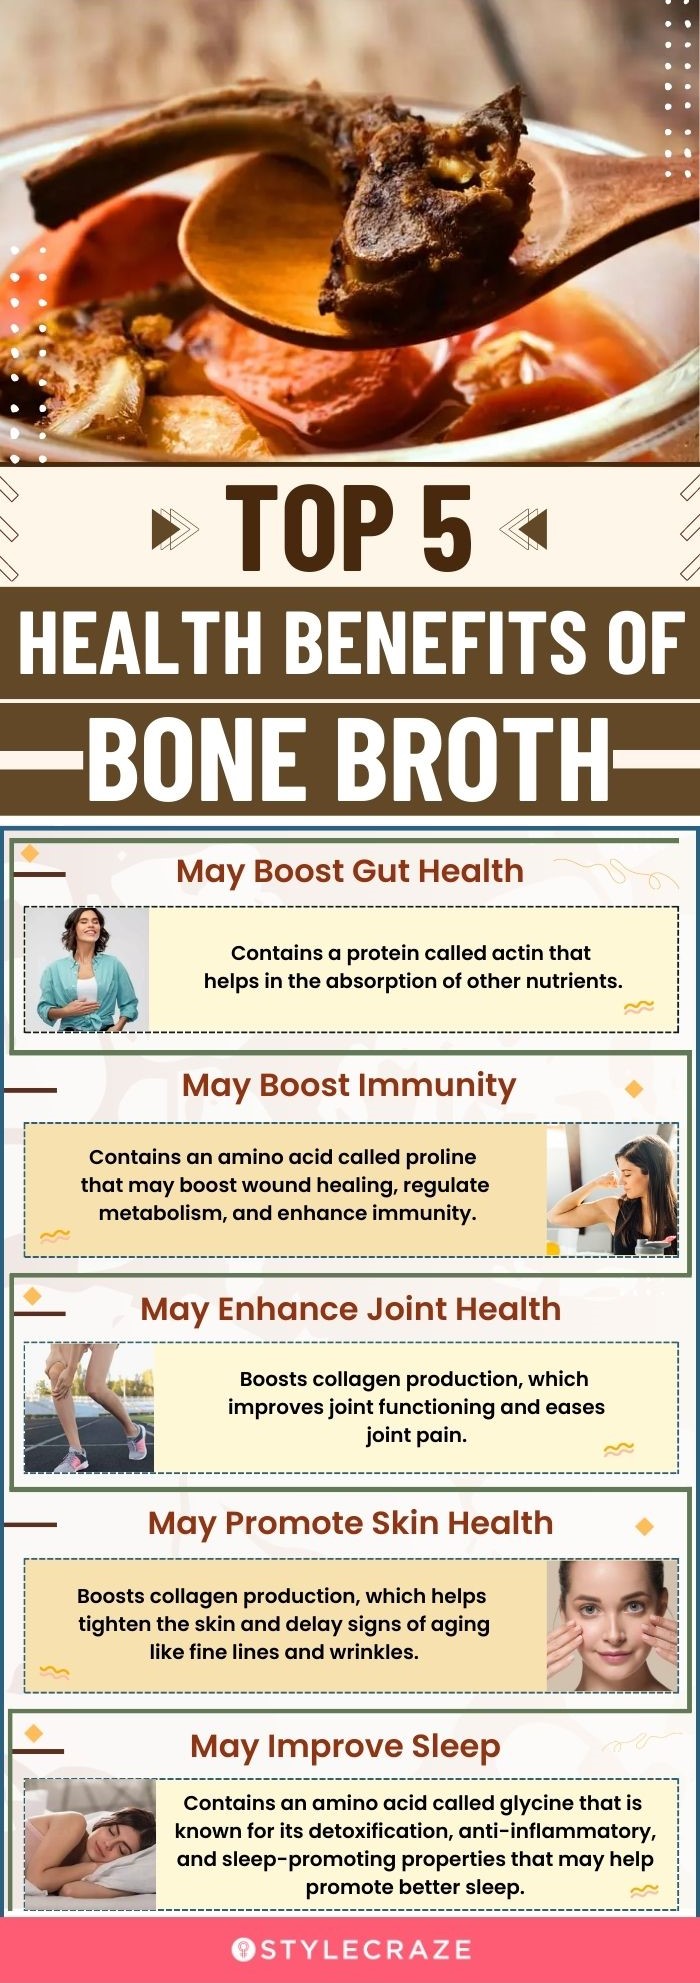 top 5 health benefits of bone broth(infographic)